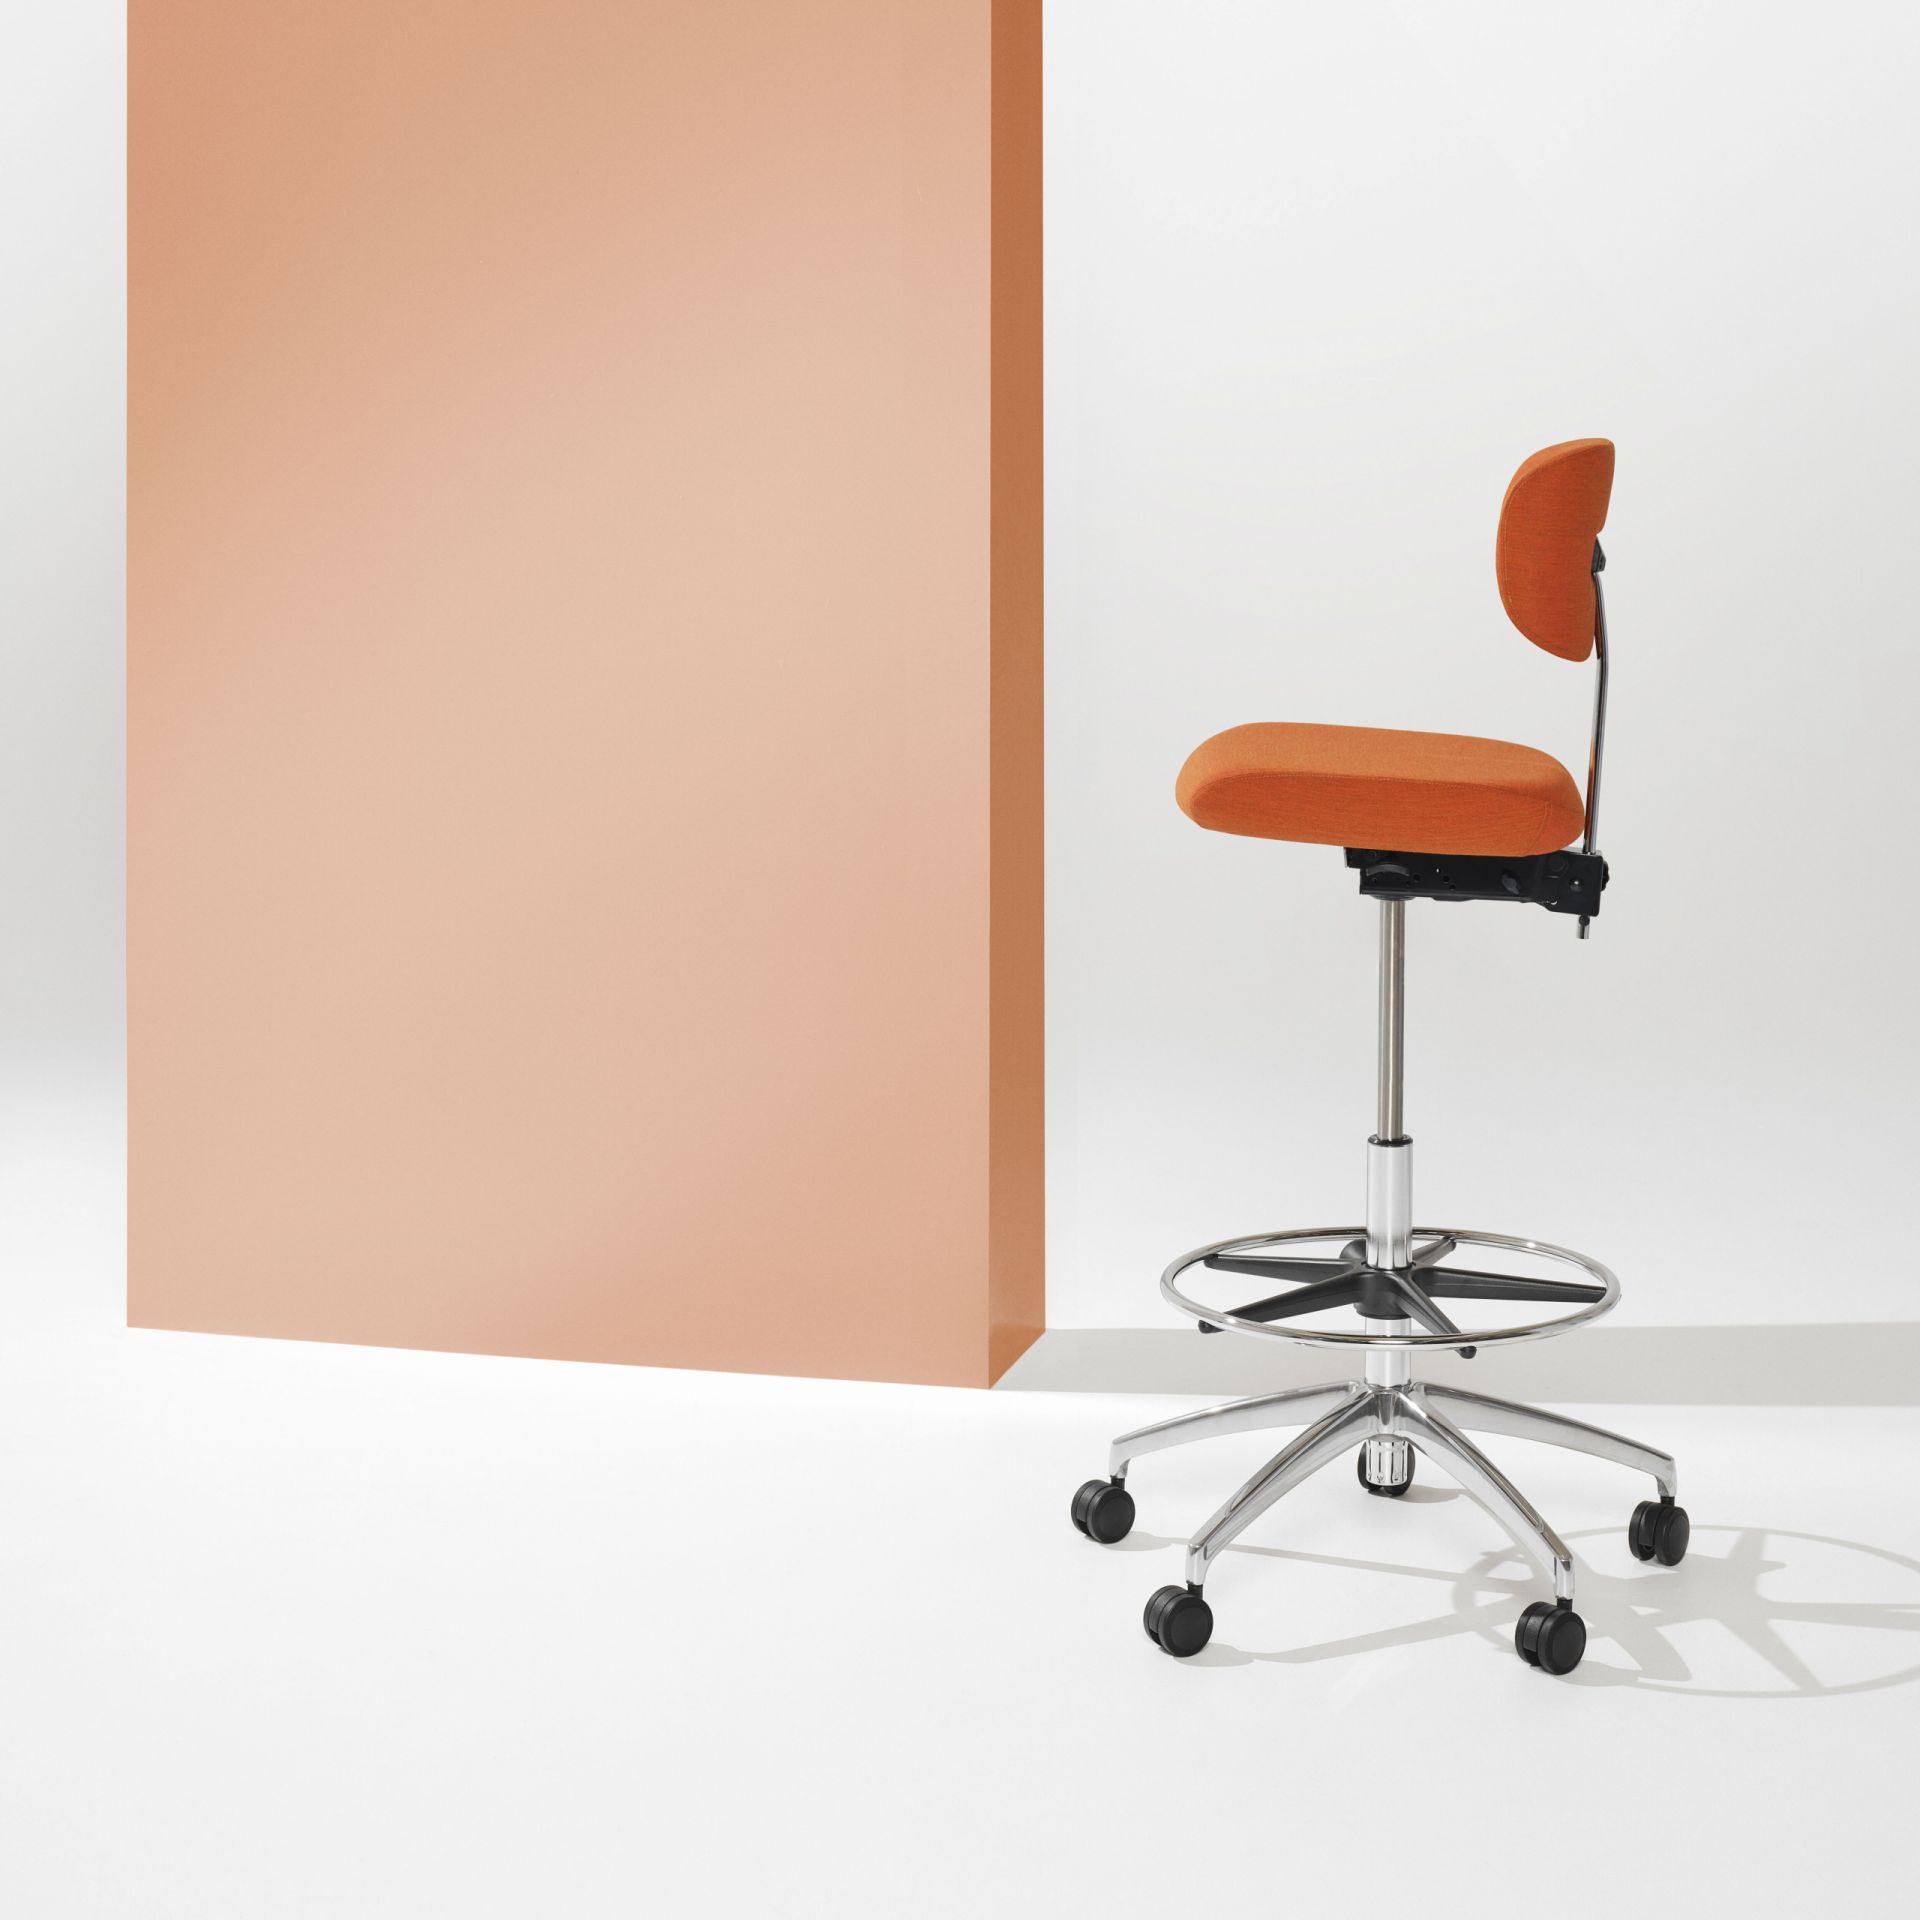 Savo Studio Studio høy stol product image 2